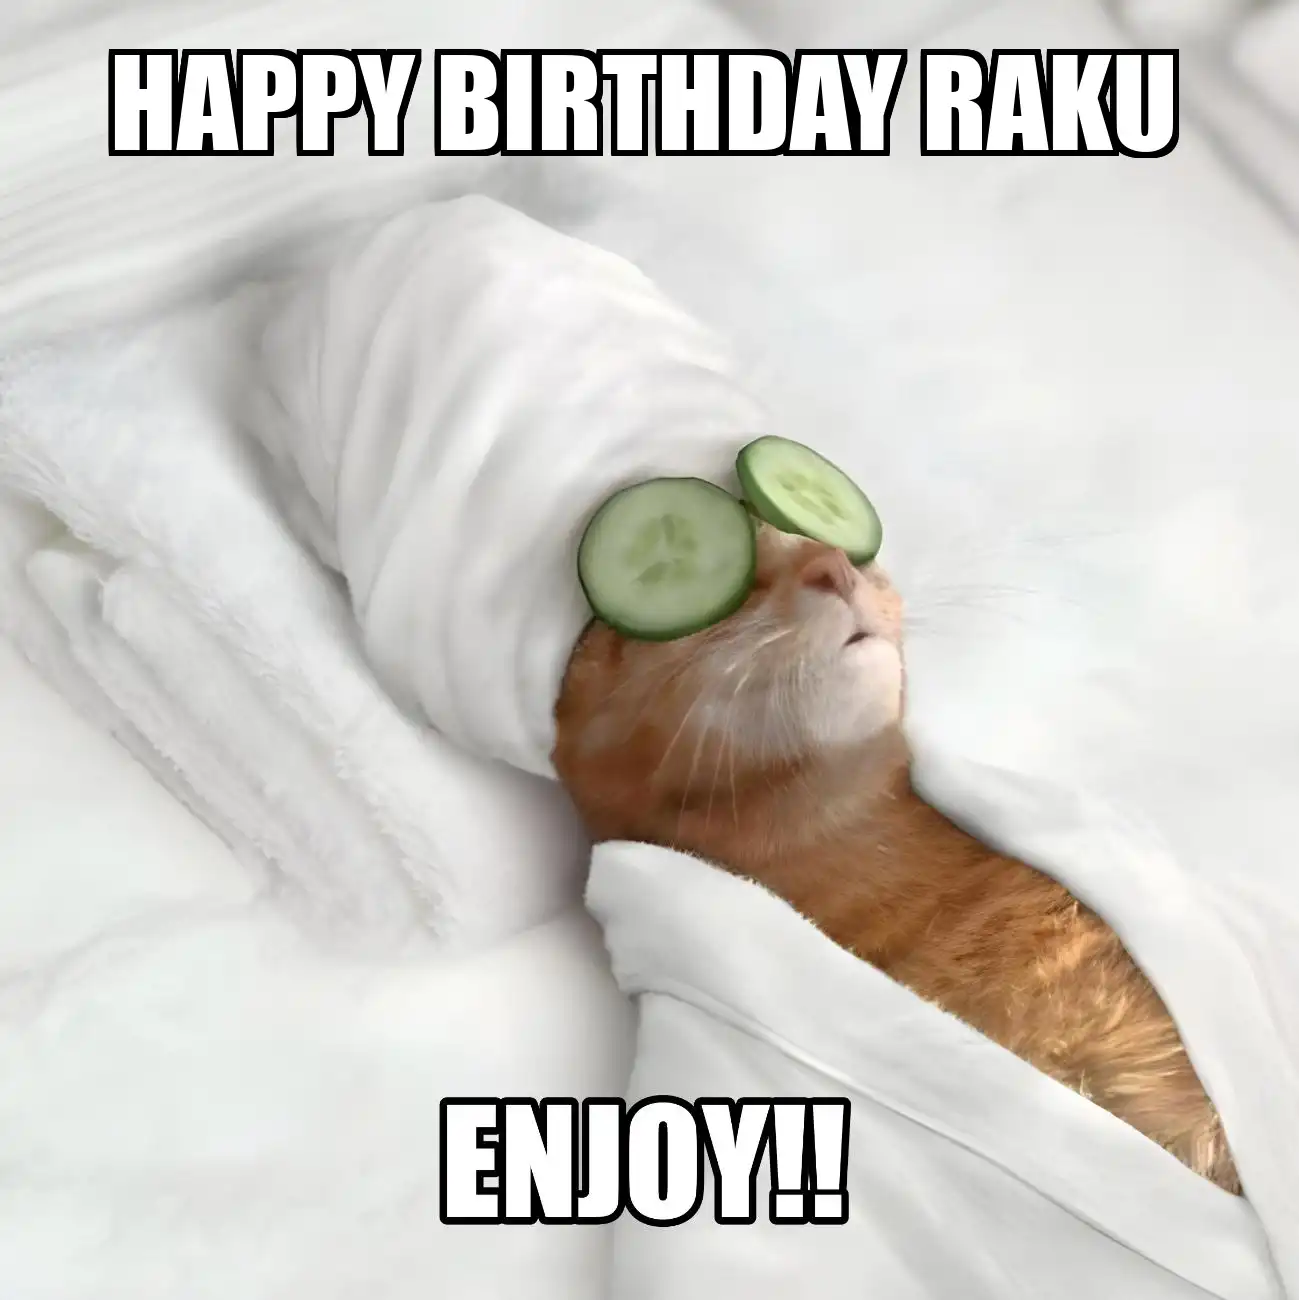 Happy Birthday Raku Enjoy Cat Meme